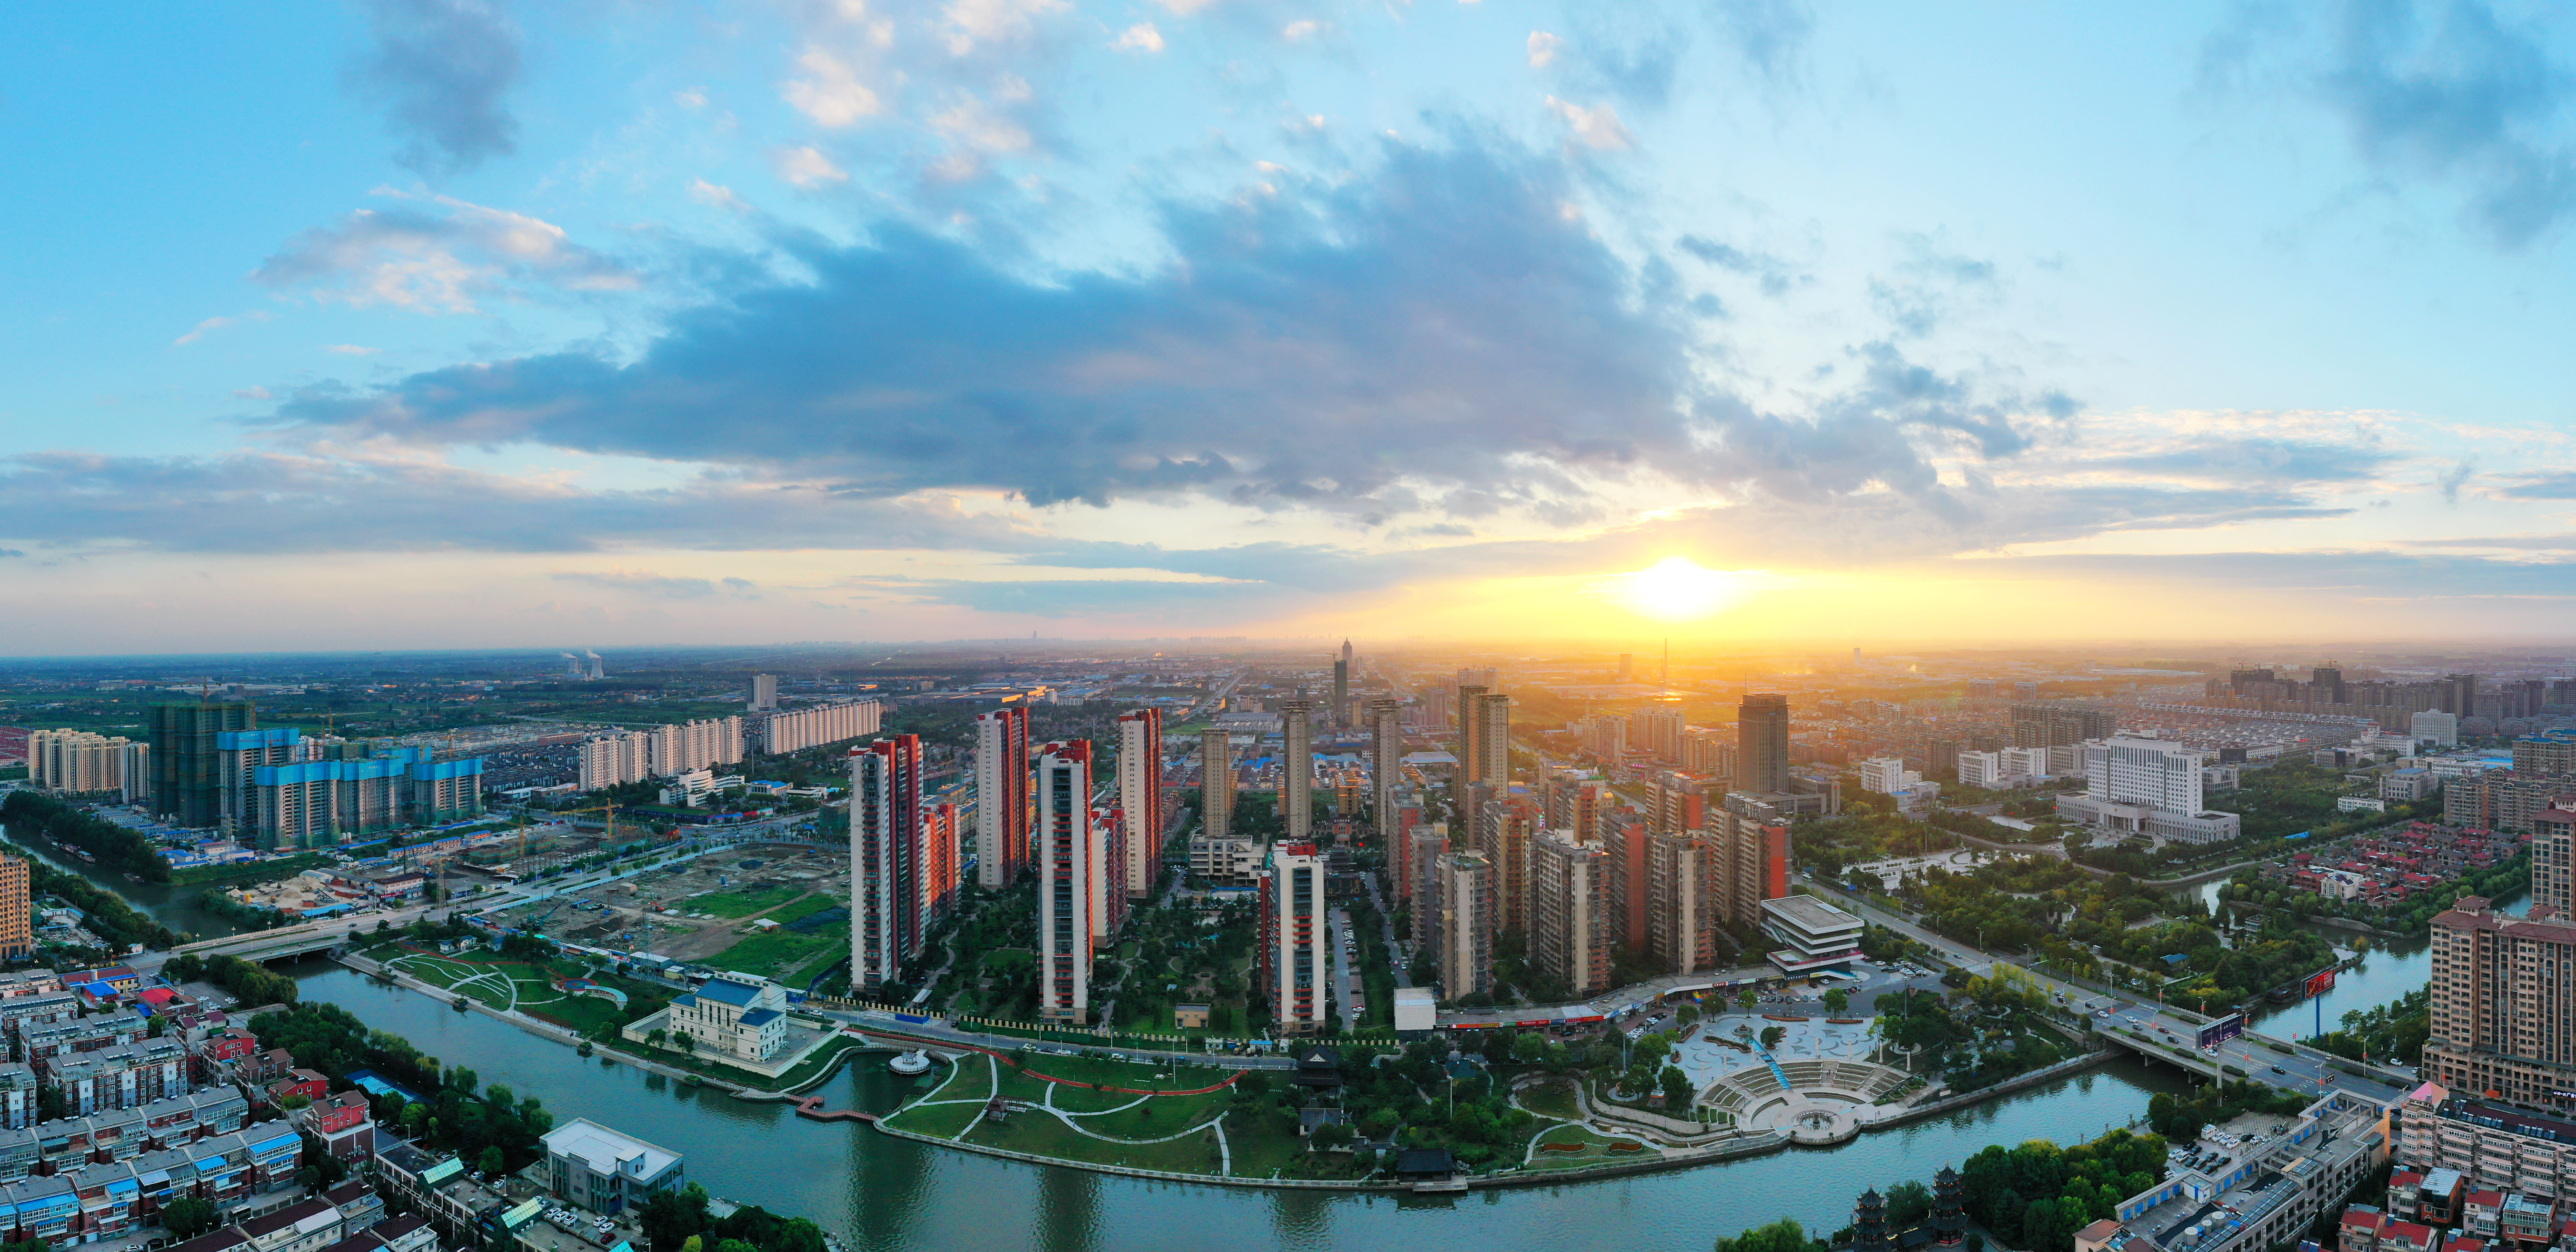 Taizhou city's Jiangyan district undergoes major development